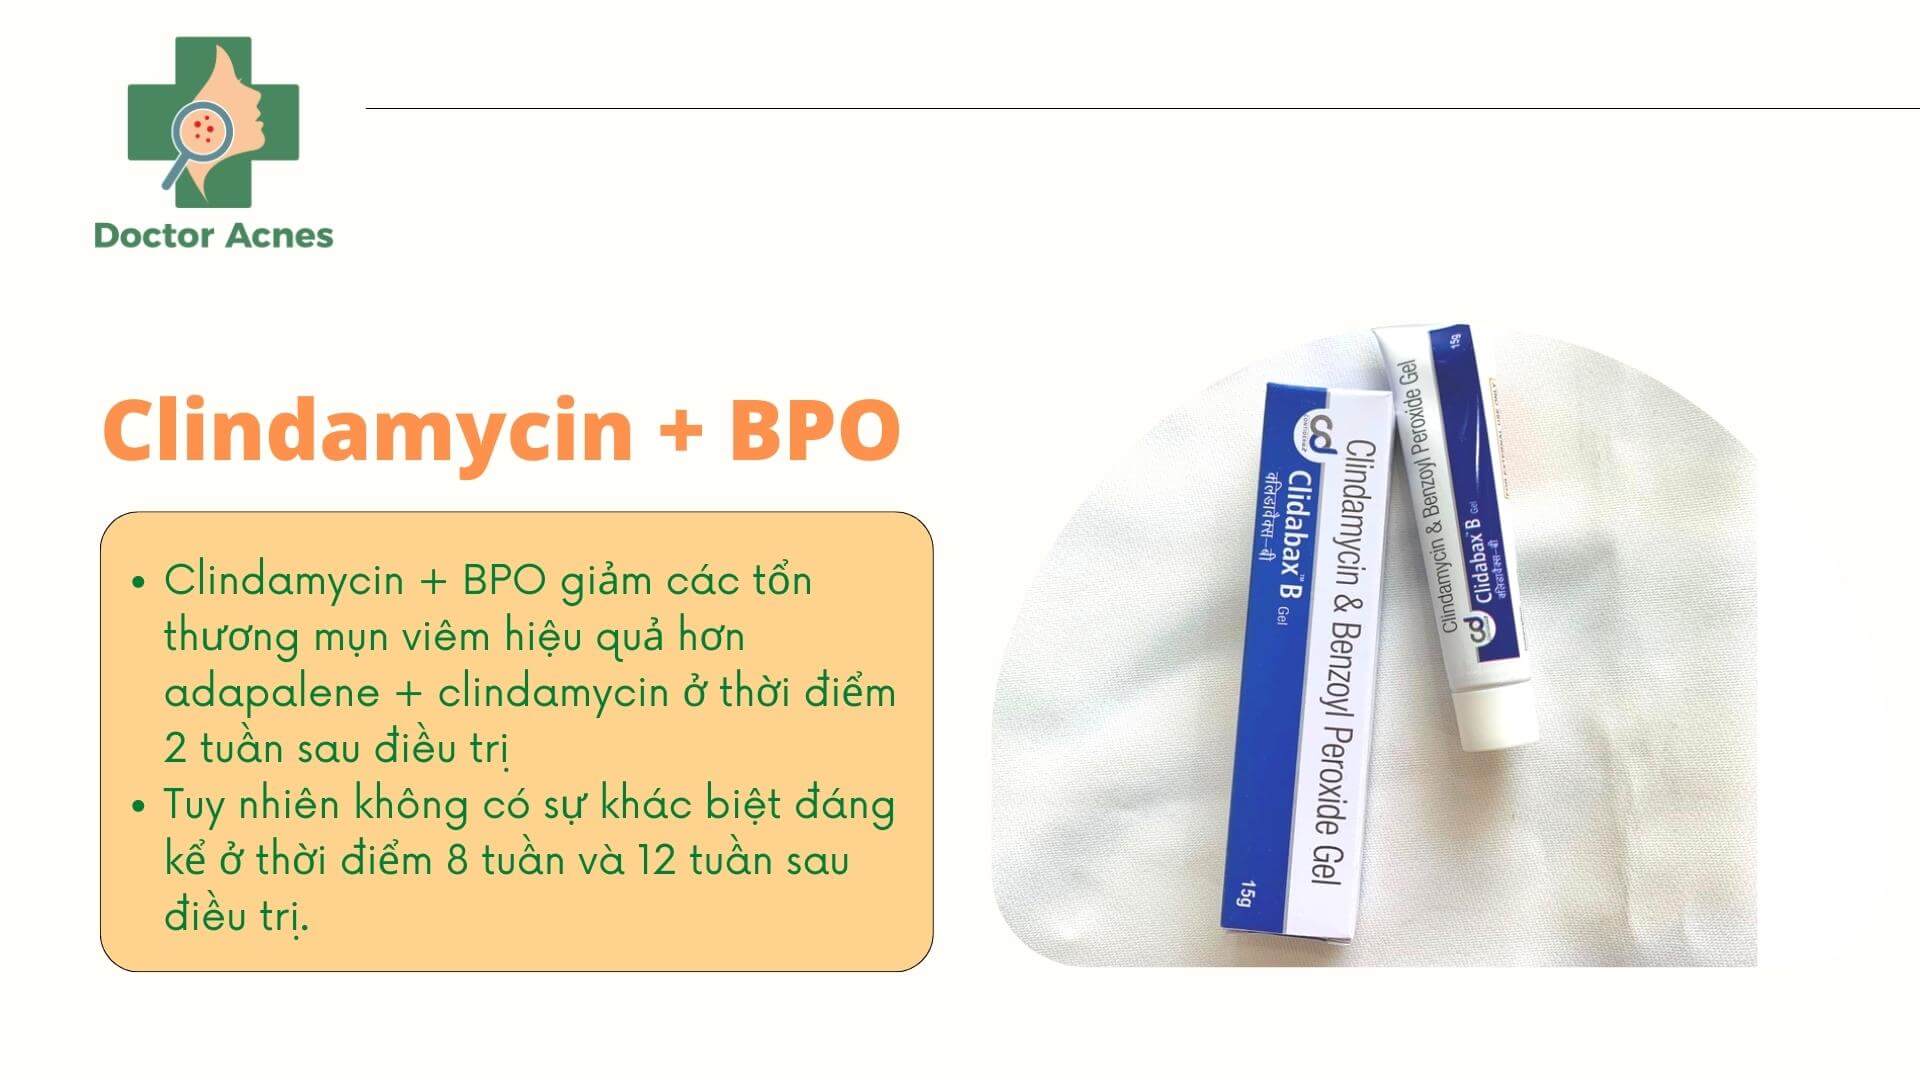 Clindamycin + BPO - Doctor Acnes